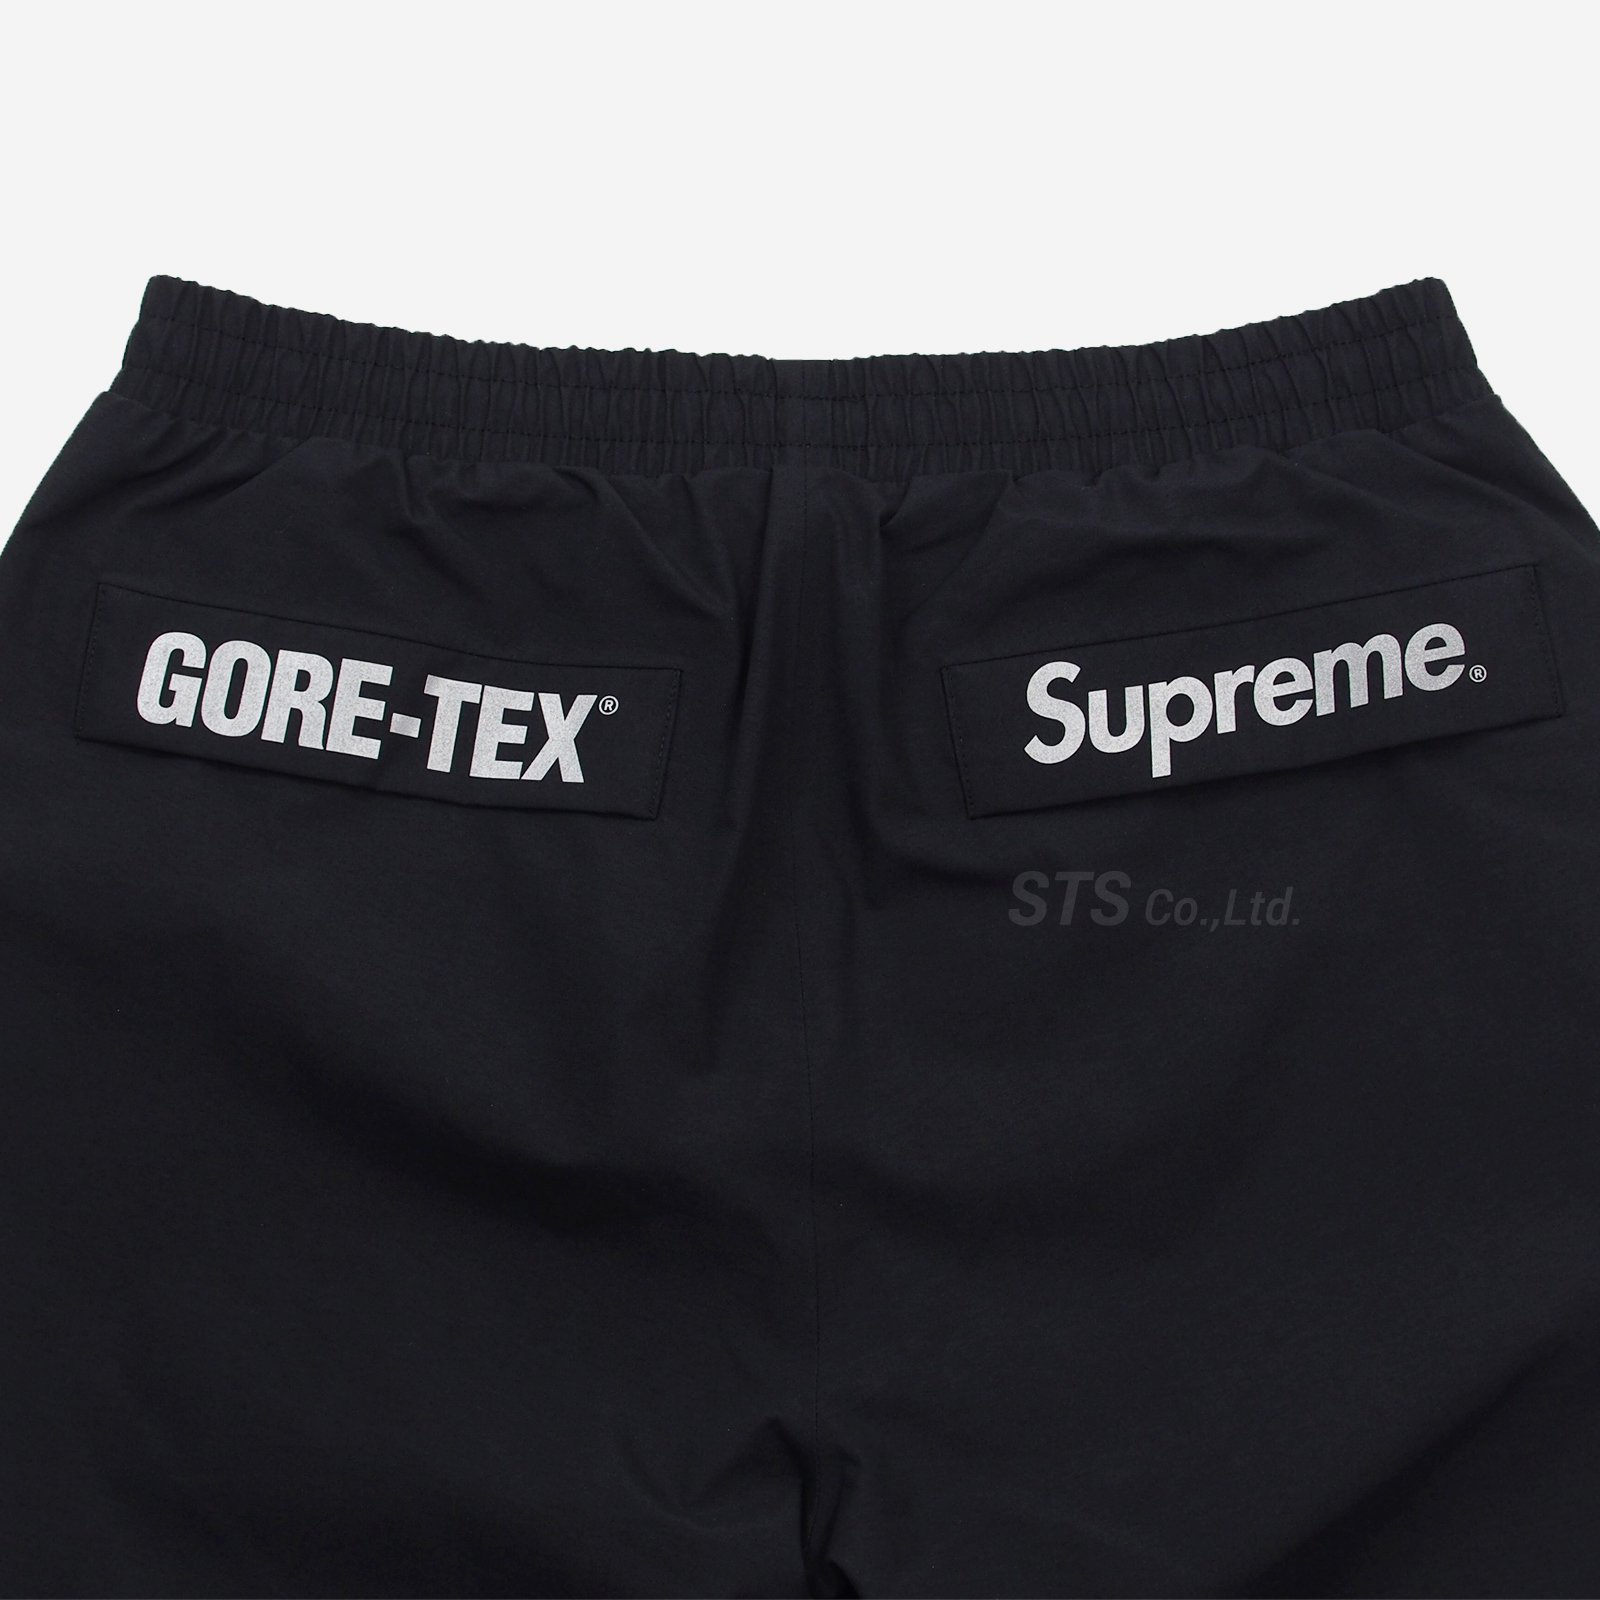 GORE-TEXPantサイズSupreme GORE-TEX Pant Sサイズ